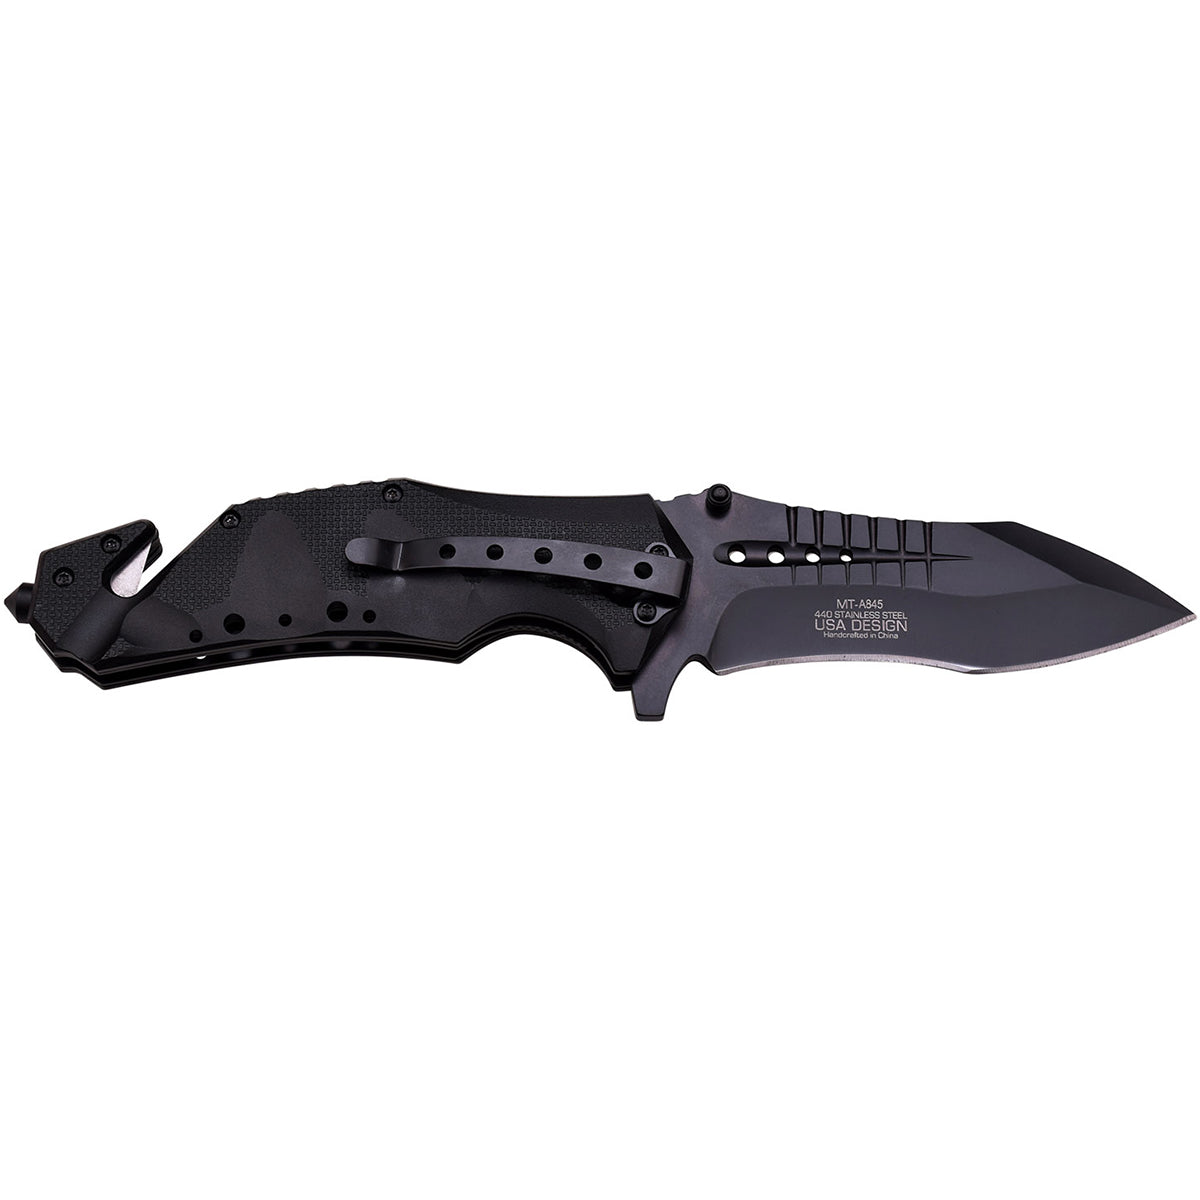 MTech USA Rescue Linerlock Spring Assisted Folding Knife, Black, MT-A845BK M-Tech